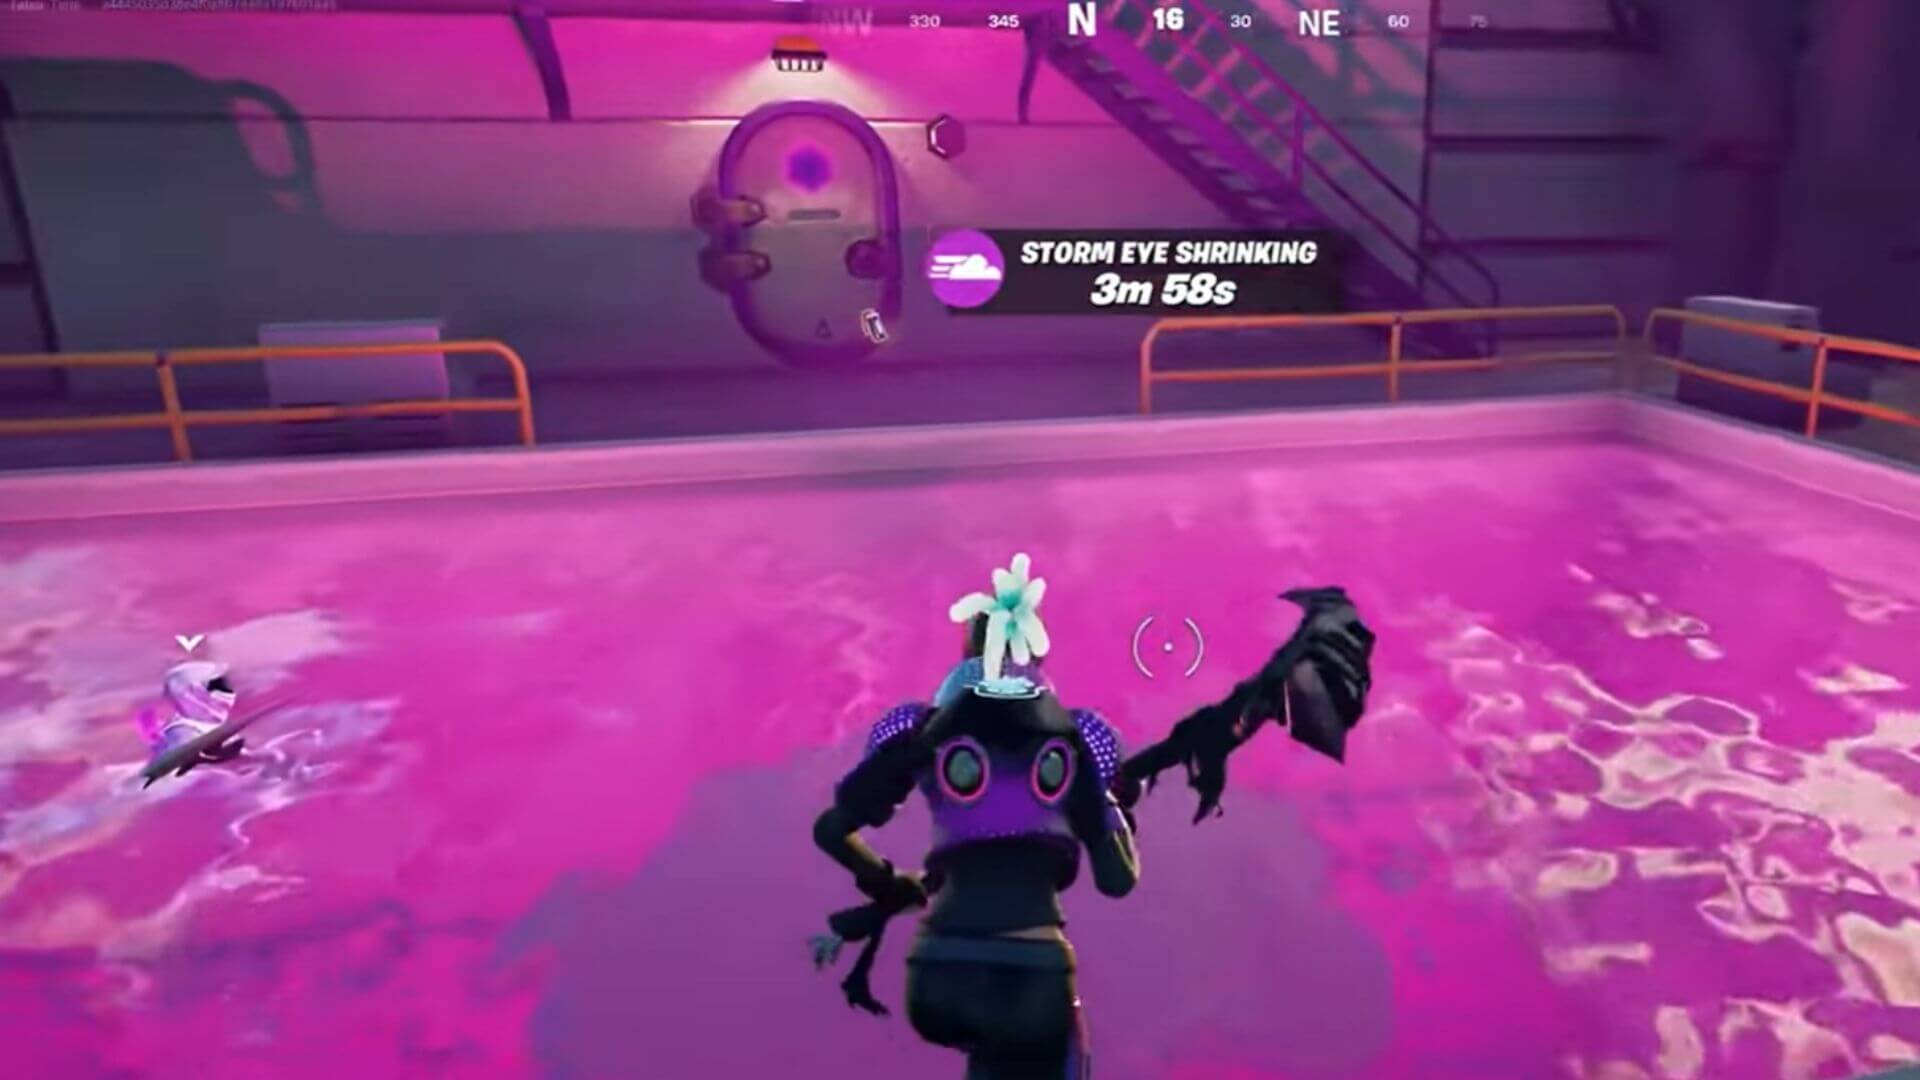 Purple Pool location in Fortnite